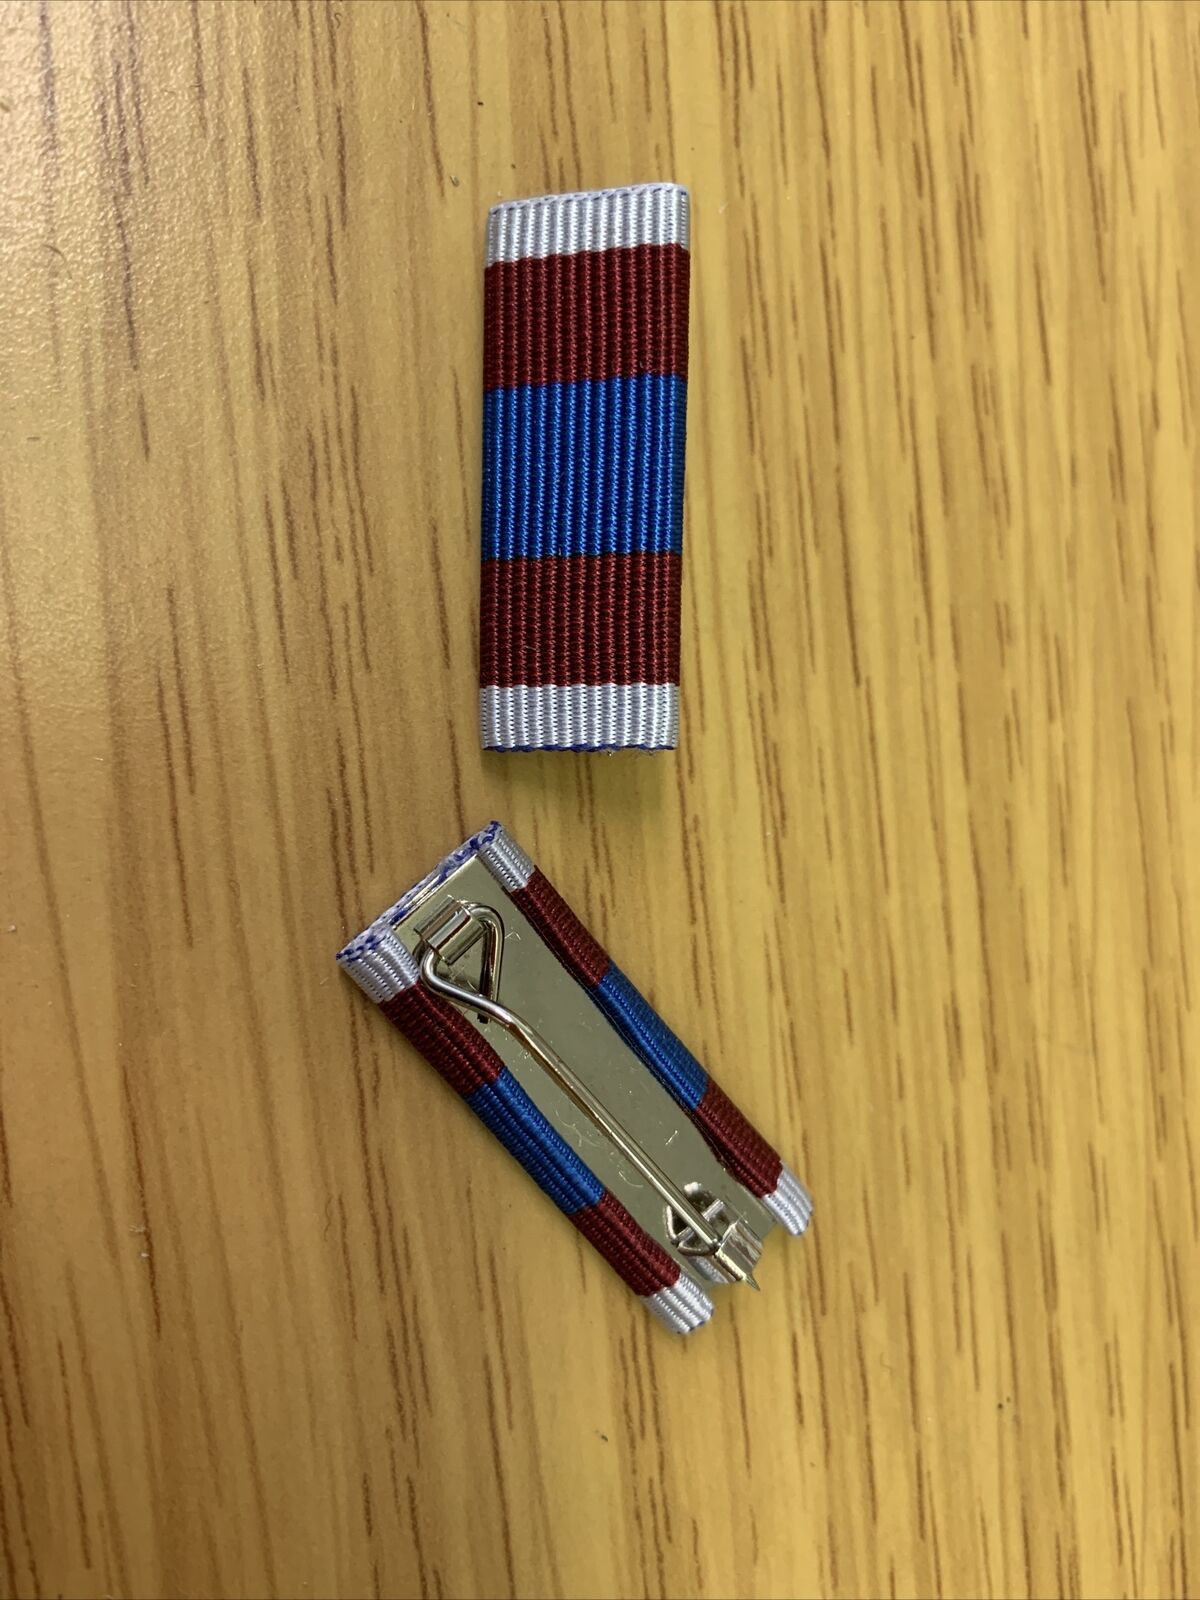 New Queens platinum jubilee medal ribbon Bar brooch pin CHEAPEST inc post 2022